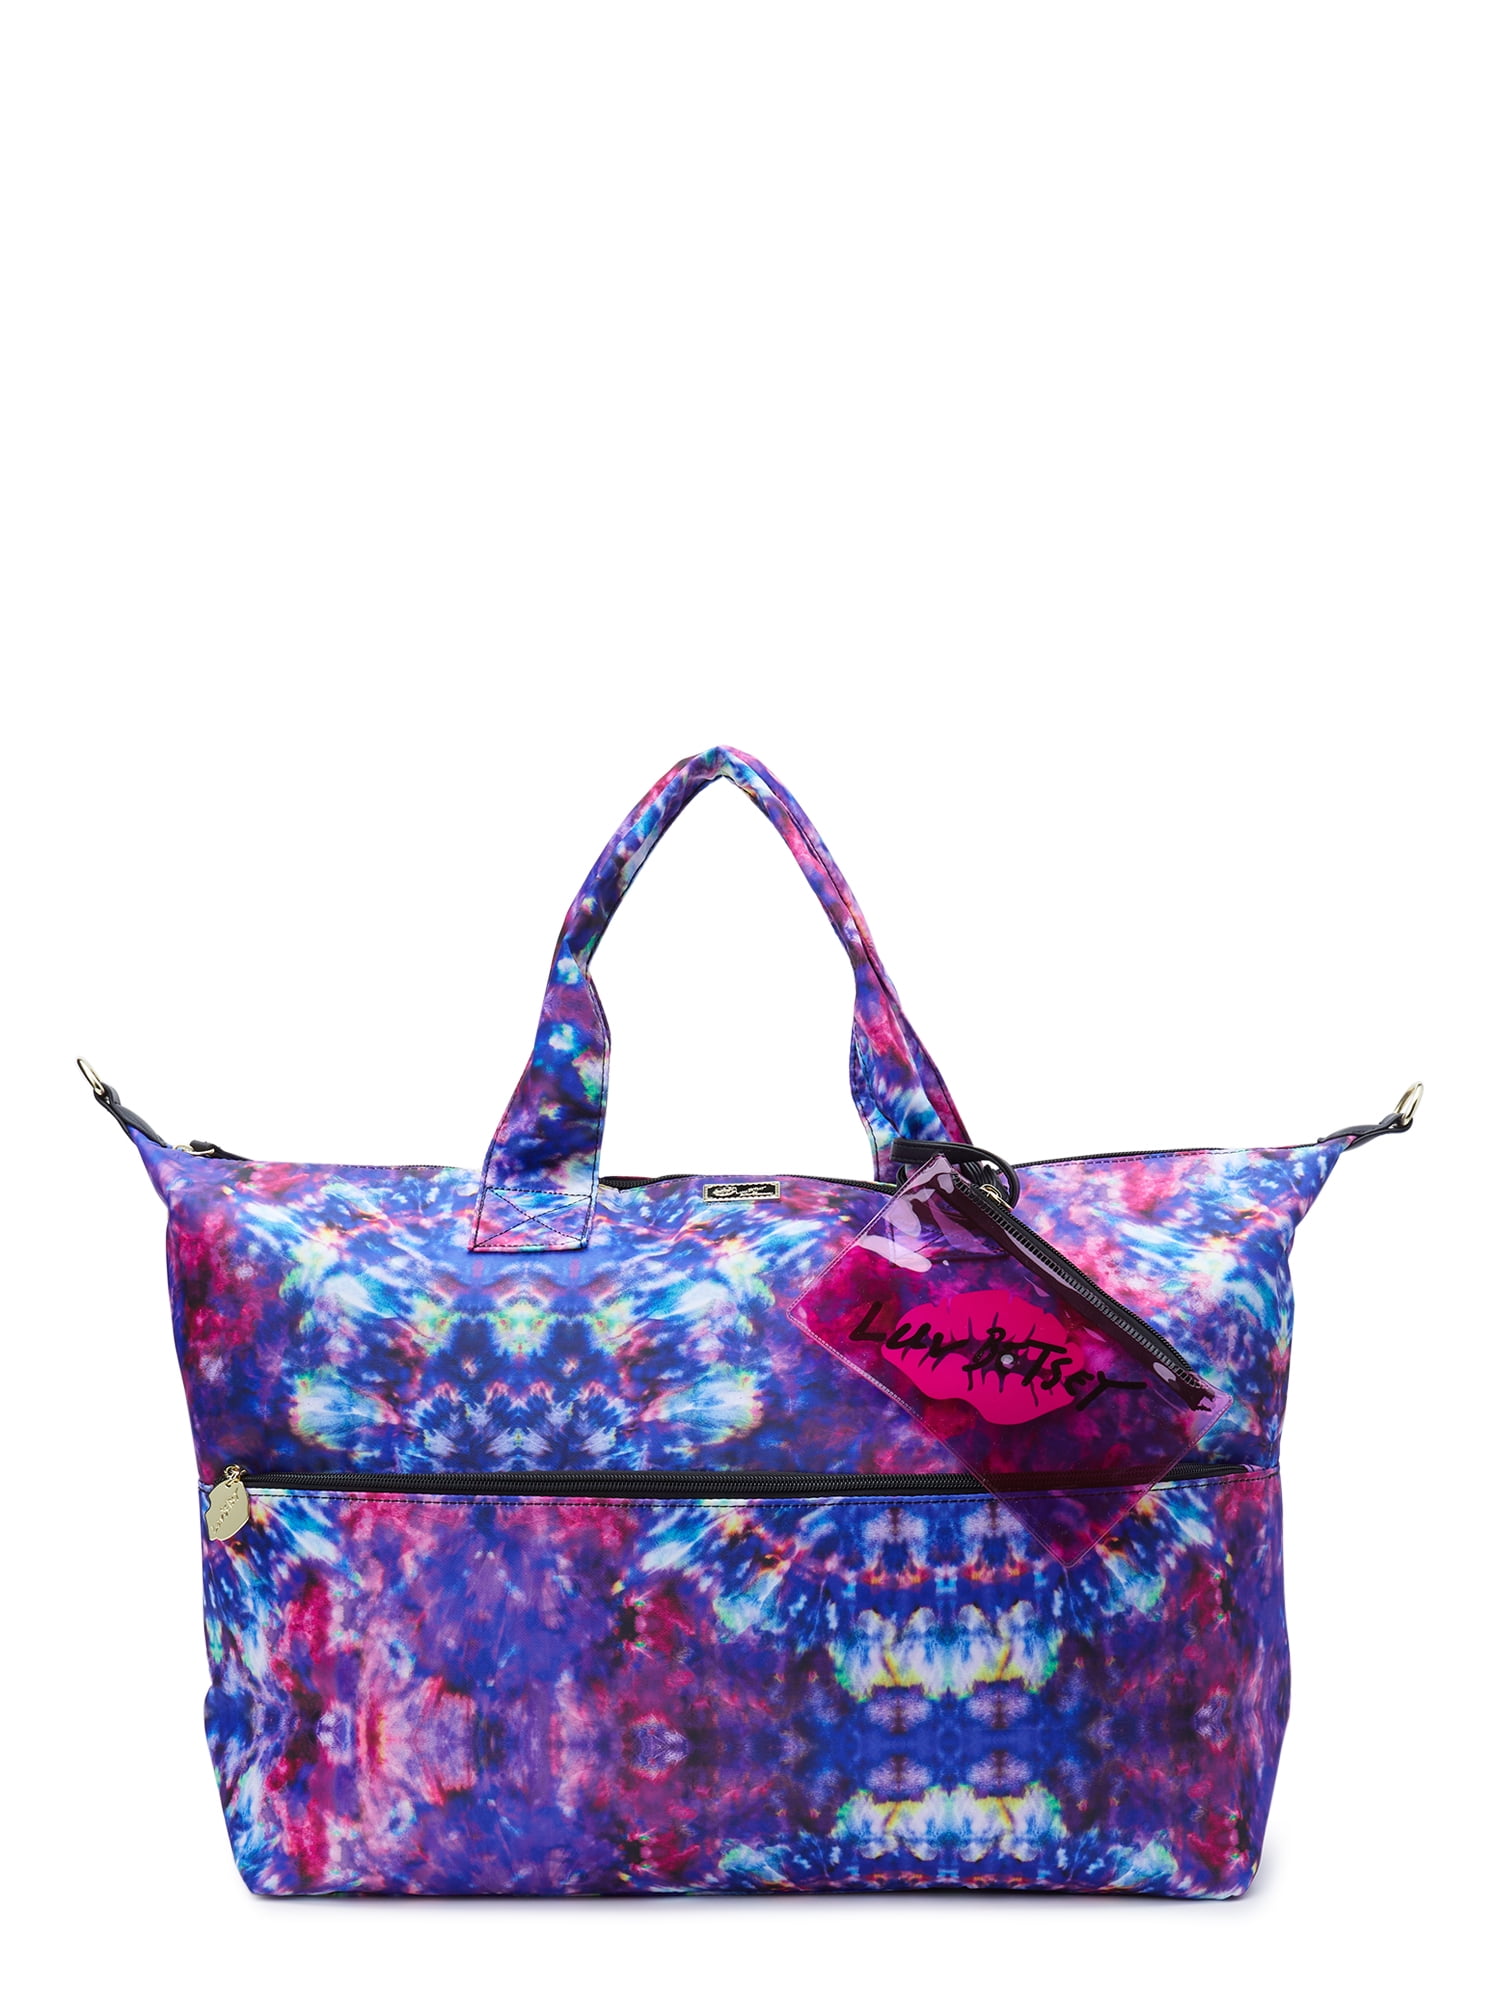 Betsey Johnson Floral Purple Rose Handbag Purse Chain Ropey